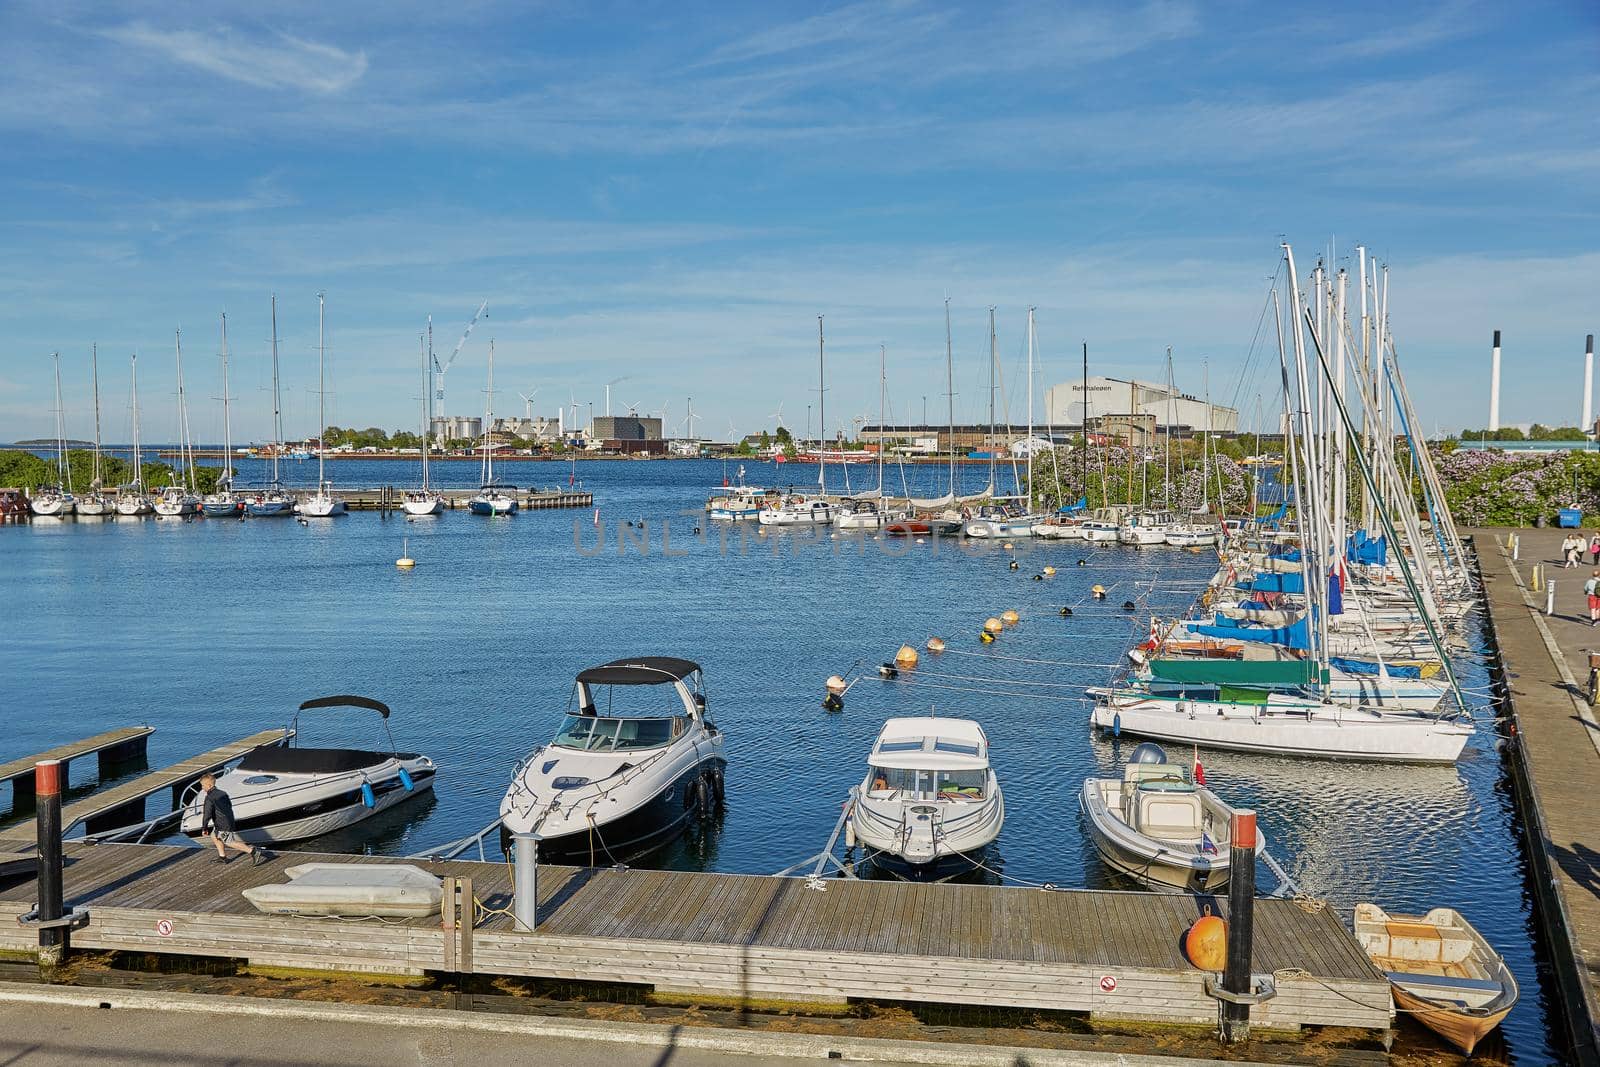 COPENHAGEN, DENMARK - MAY 25, 2017: Luxury speedboats docked along side of wooden promenade at Danish capital of Copenhagen.